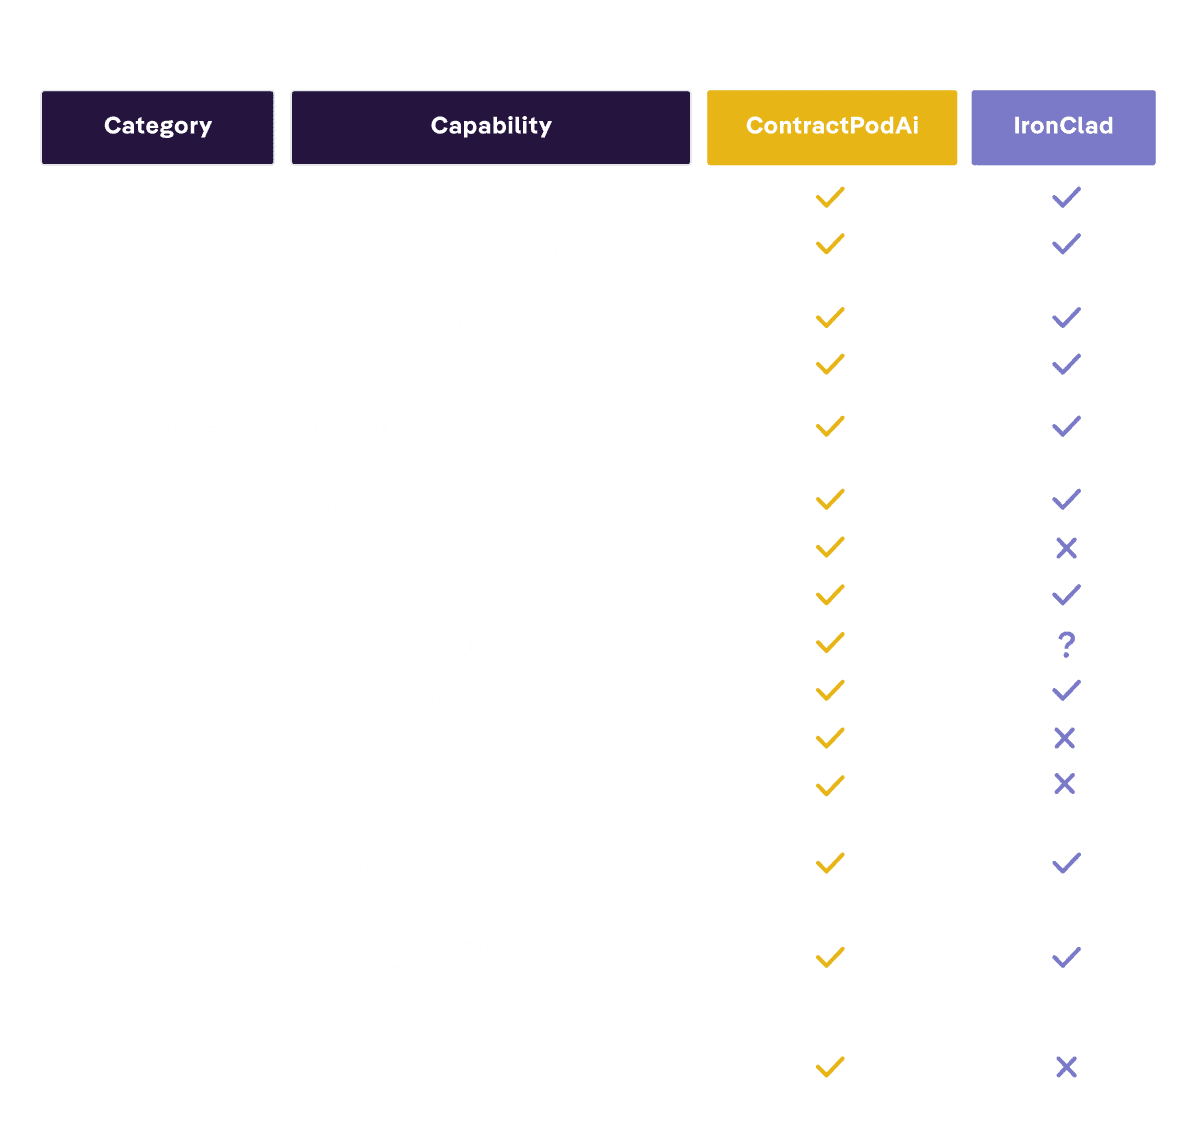 ContractPodAi vs. IronClad Feature Comparison Chart